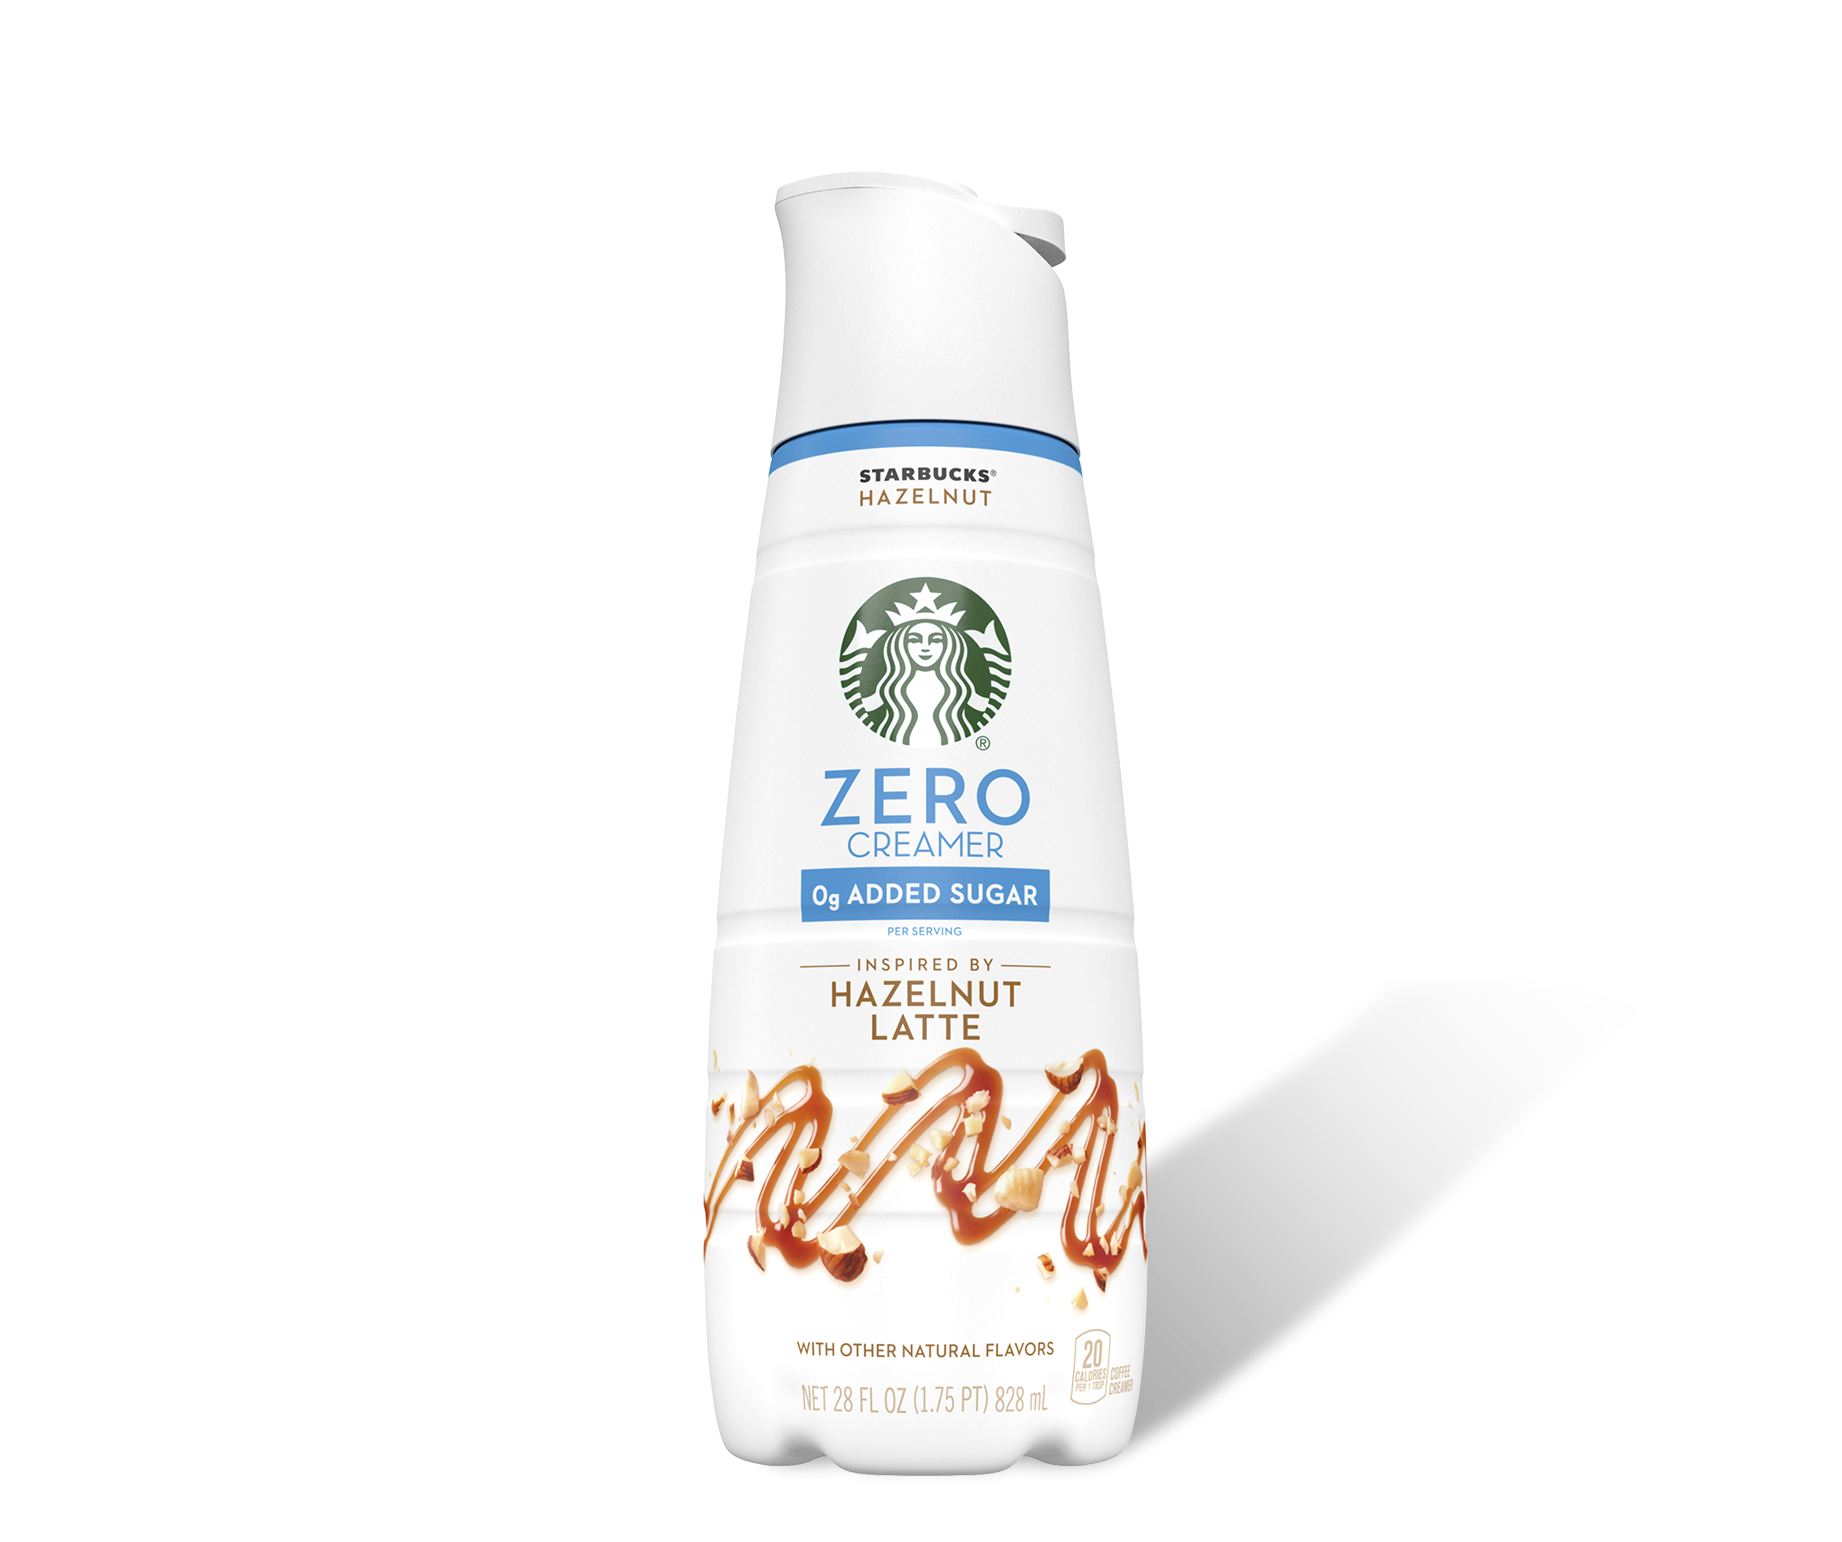 Starbucks® Hazelnut Flavored Zero Creamer